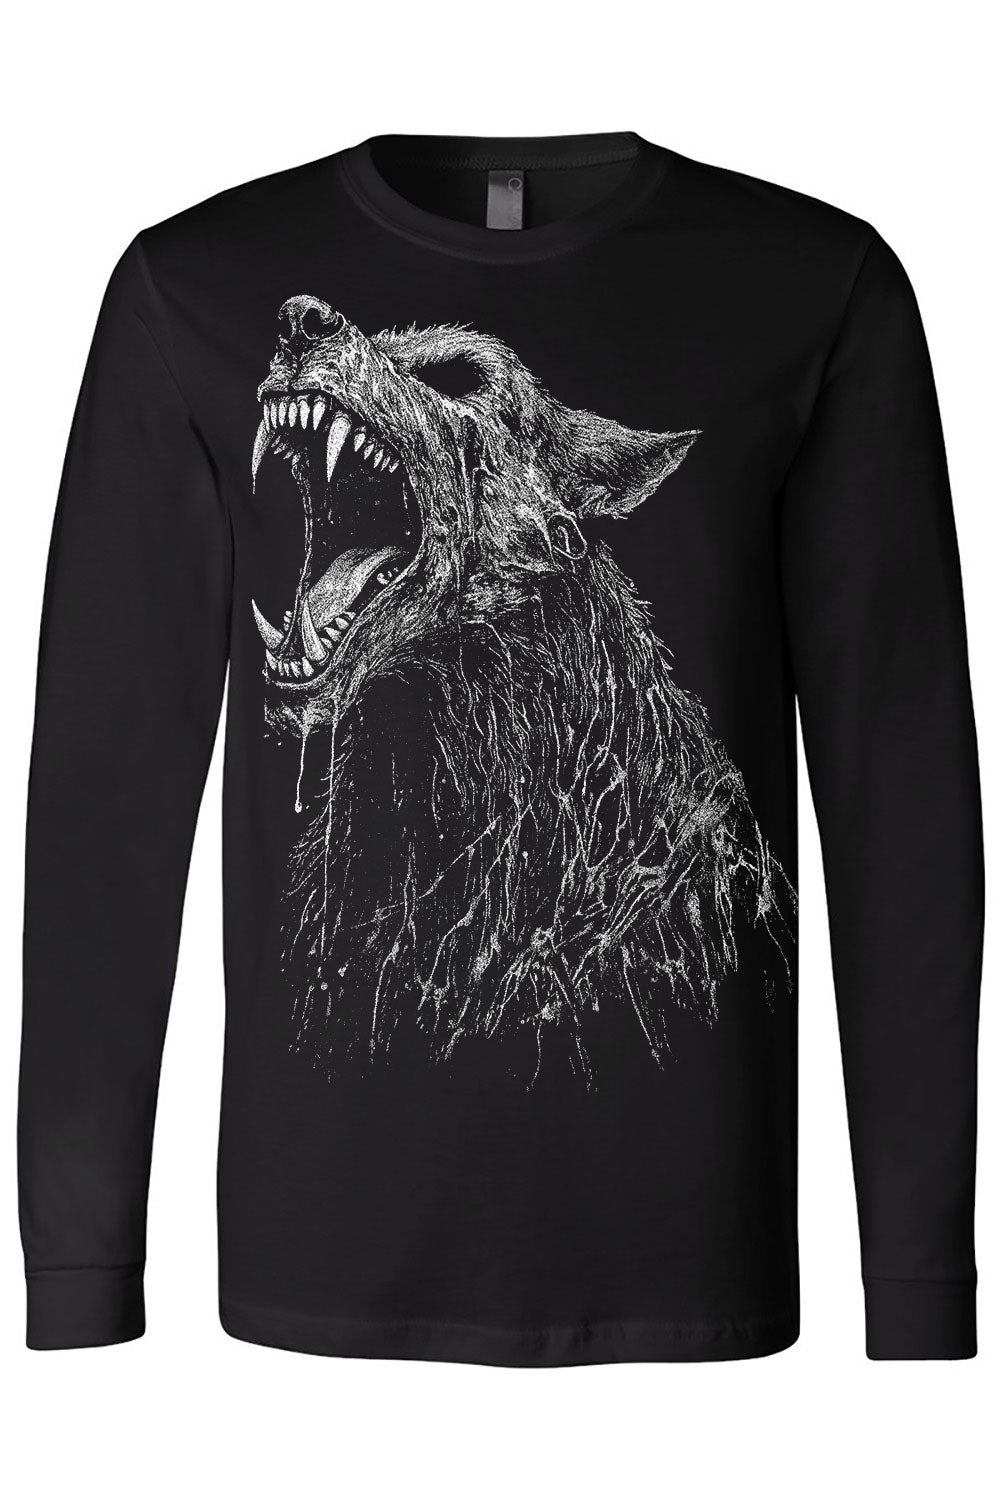 Lycanthrope T-shirt